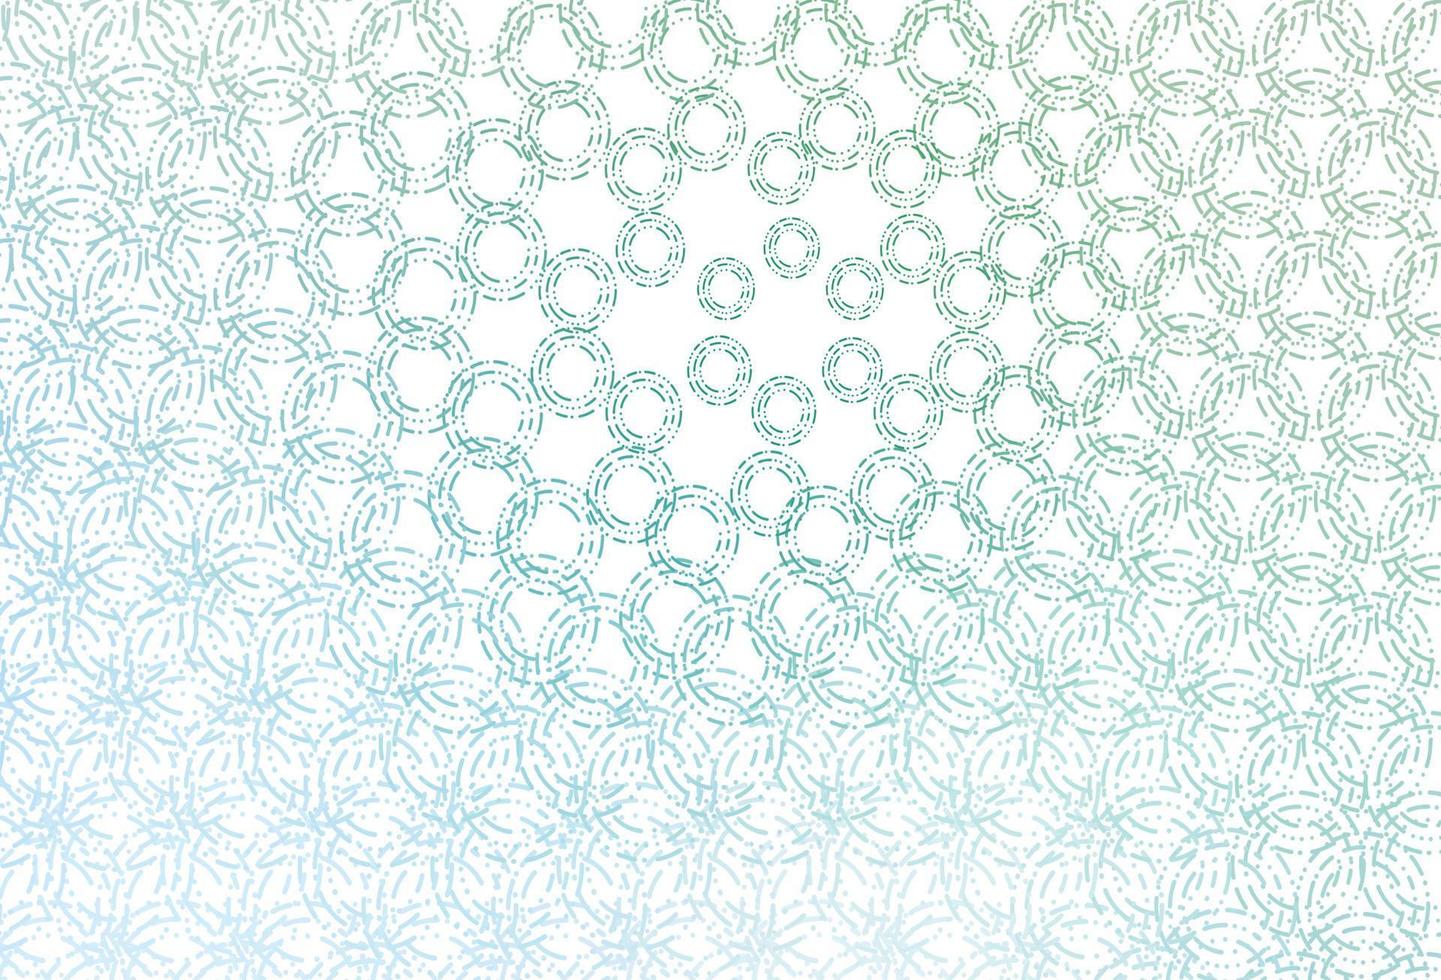 hellblaue, grüne Vektorschablone mit Kreisen. vektor